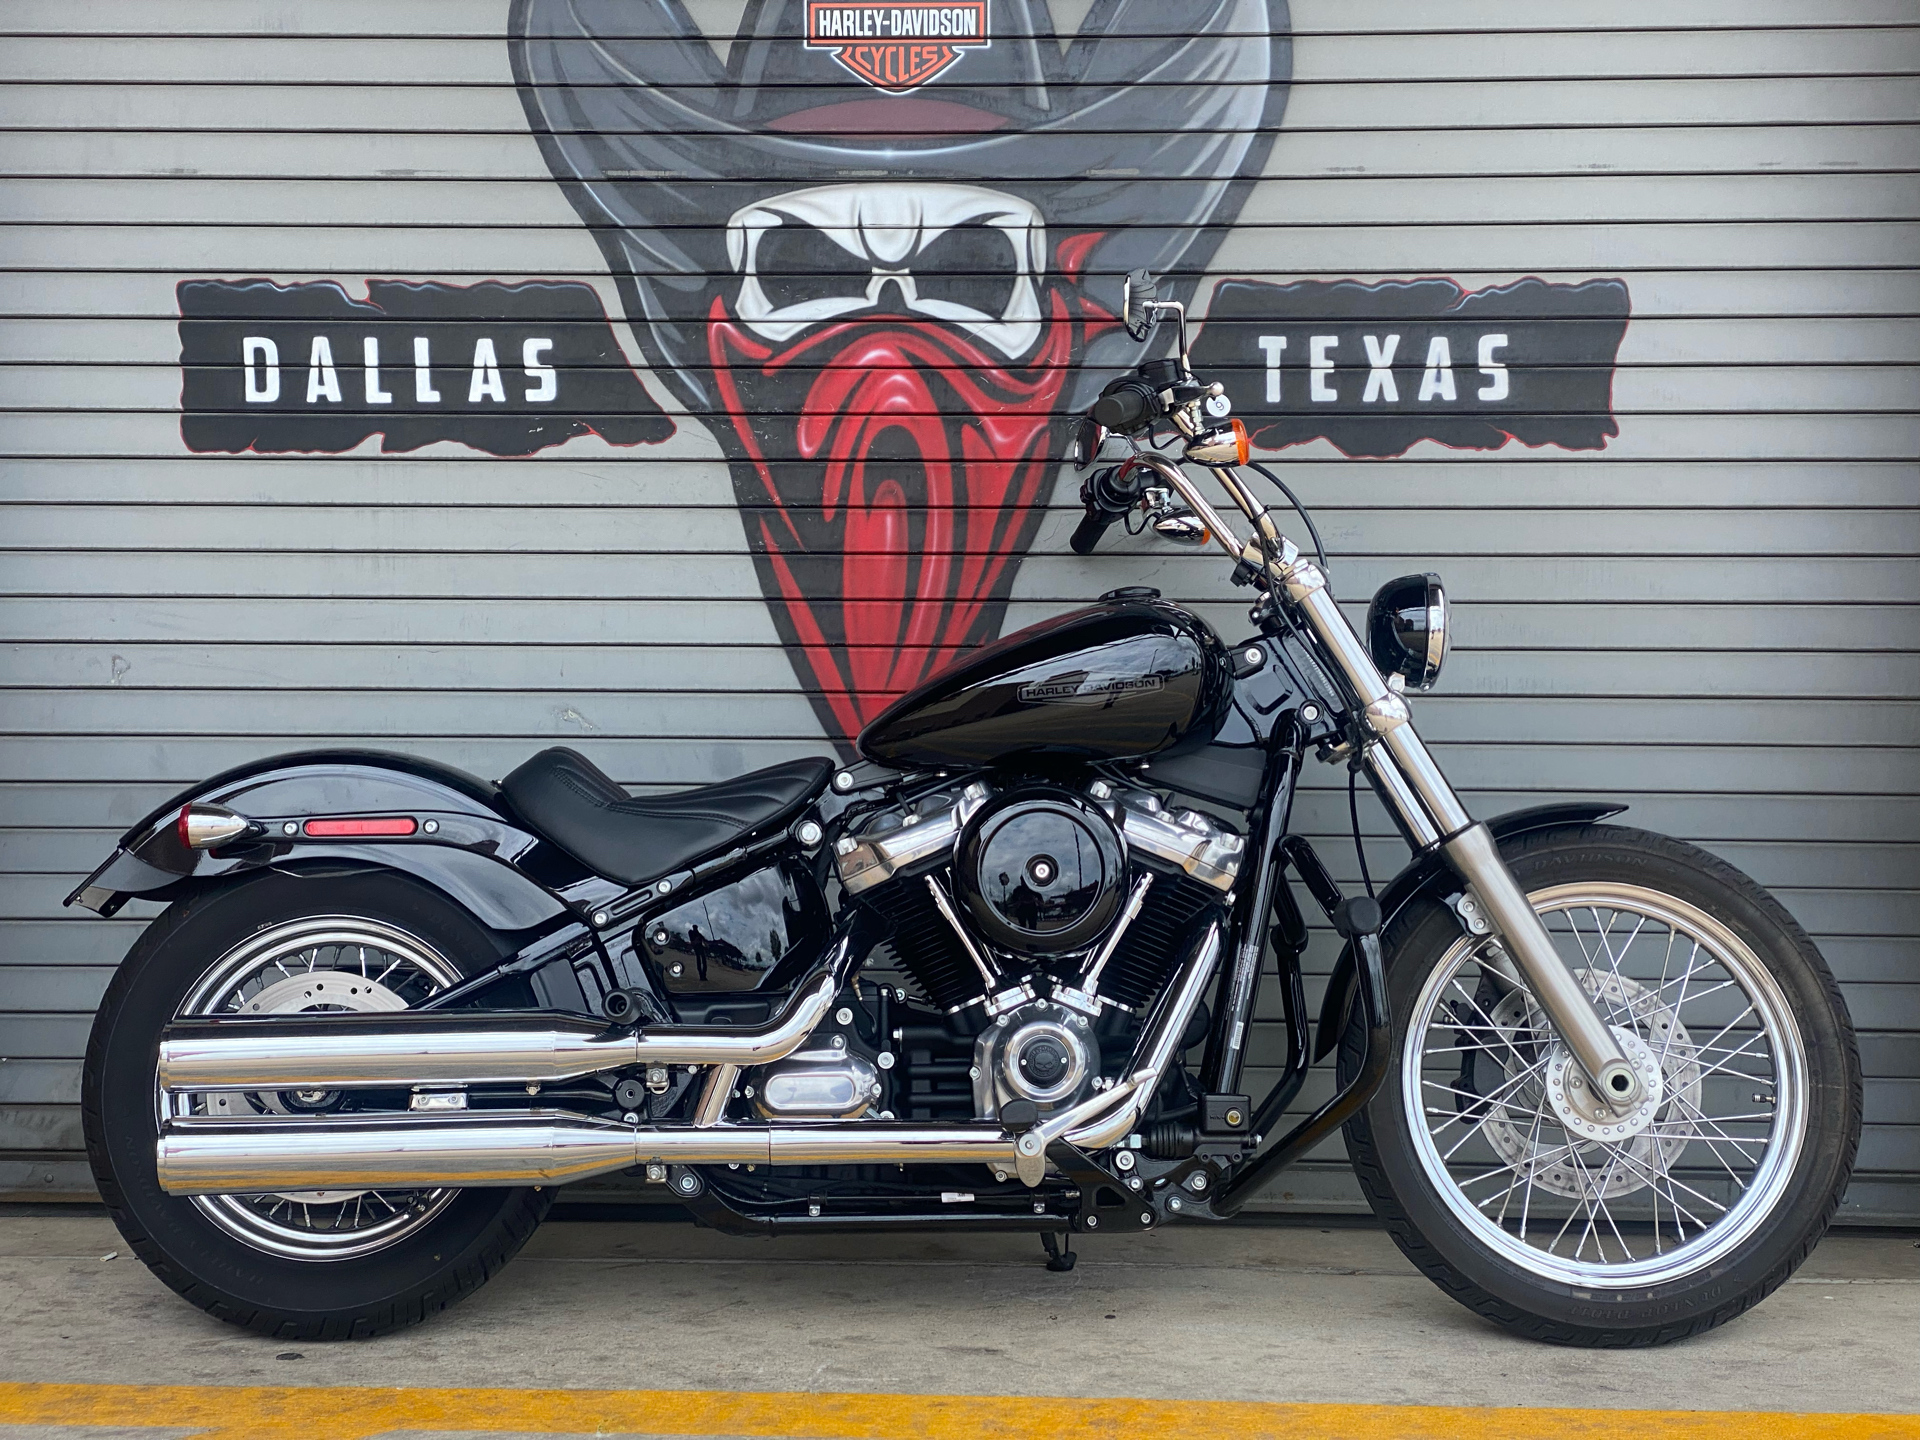 2021 Harley-Davidson Softail® Standard in Carrollton, Texas - Photo 3